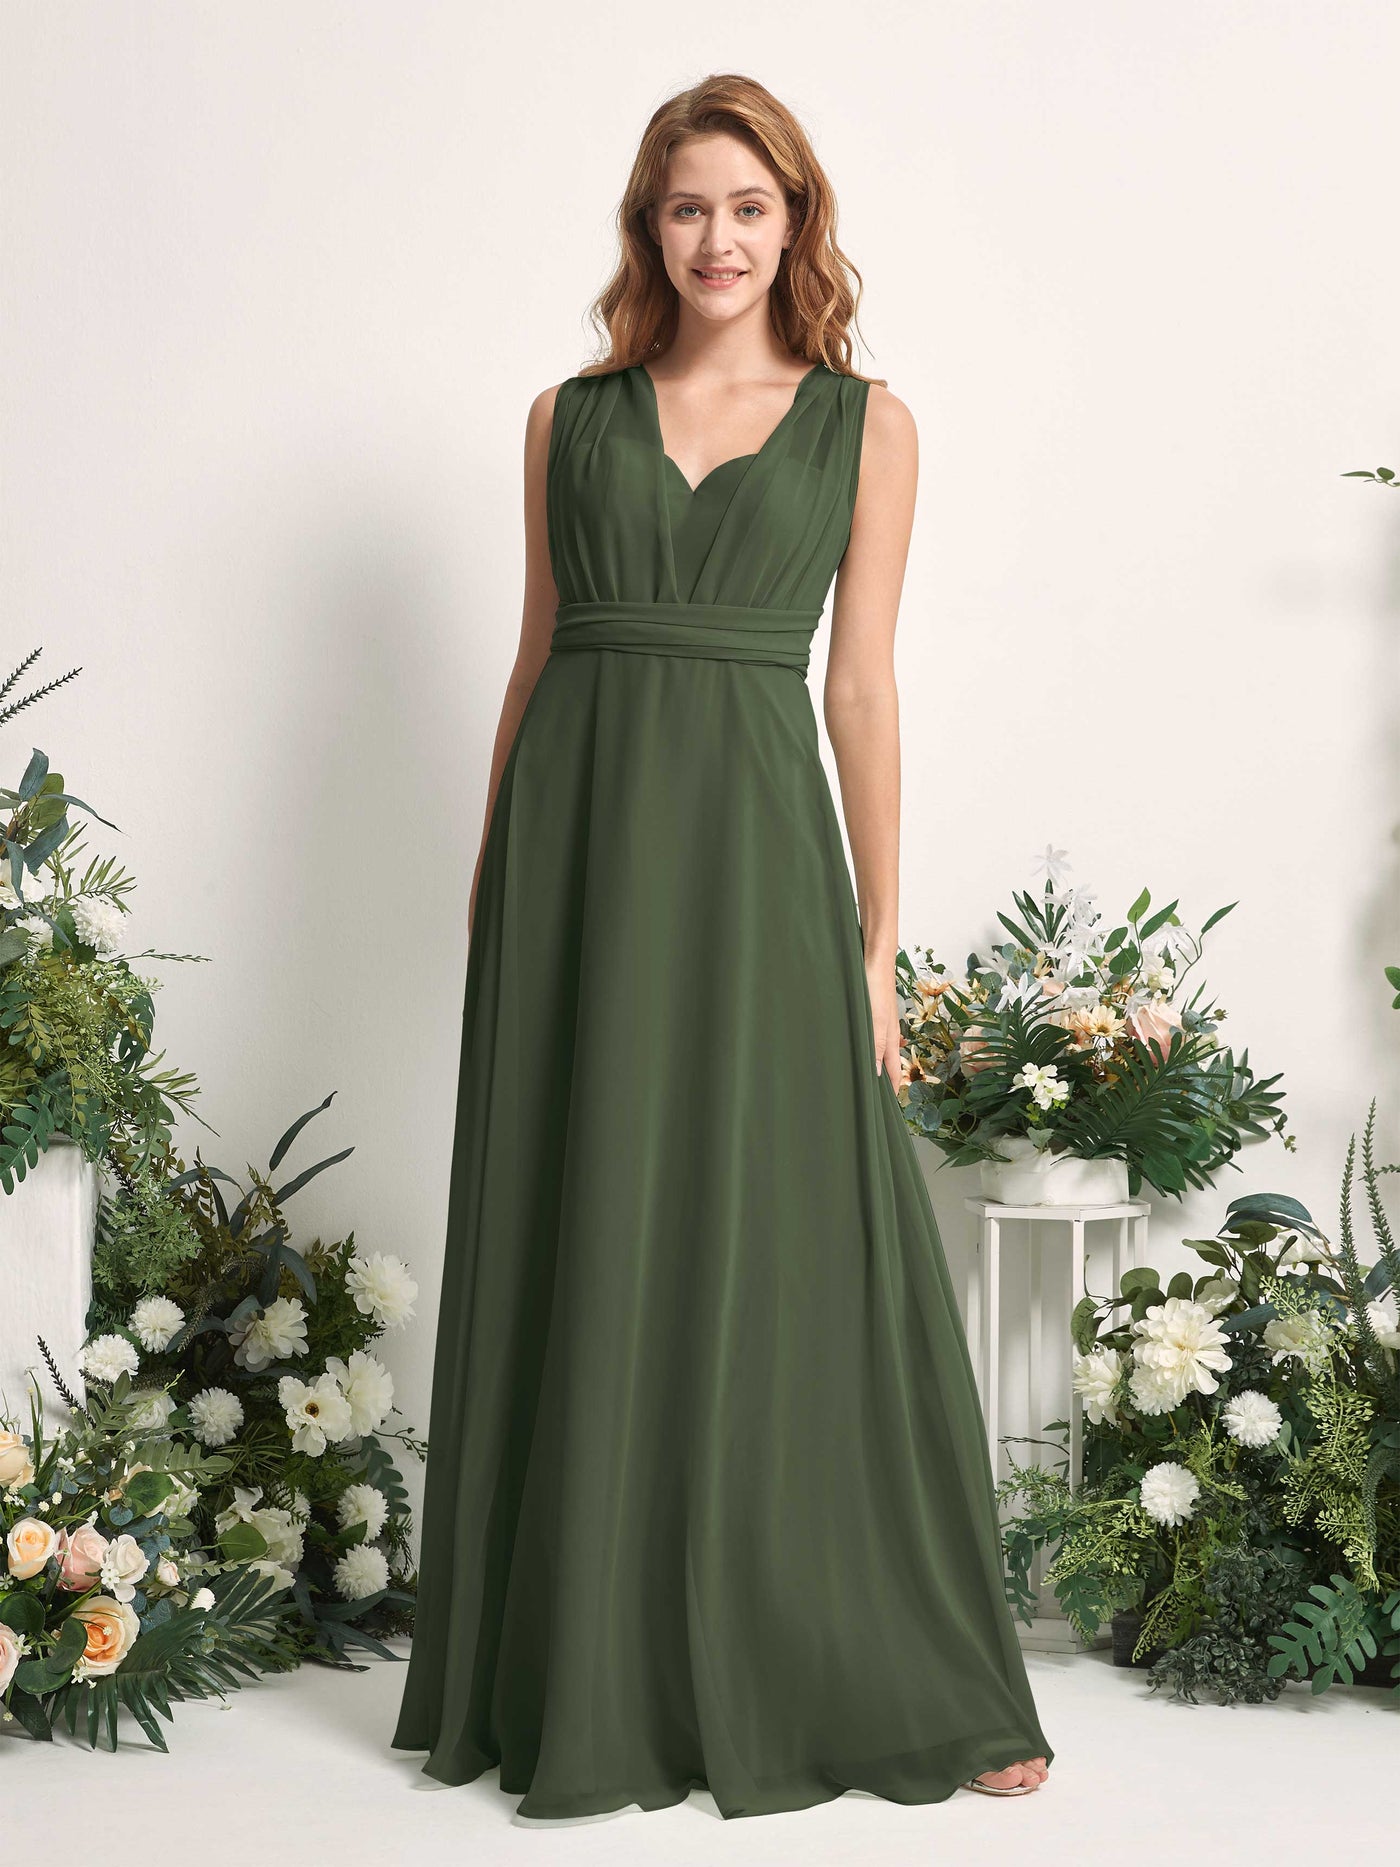 Martini Olive Bridesmaid Dresses Bridesmaid Dress A-line Chiffon Halter Full Length Short Sleeves Wedding Party Dress (81226307)#color_martini-olive